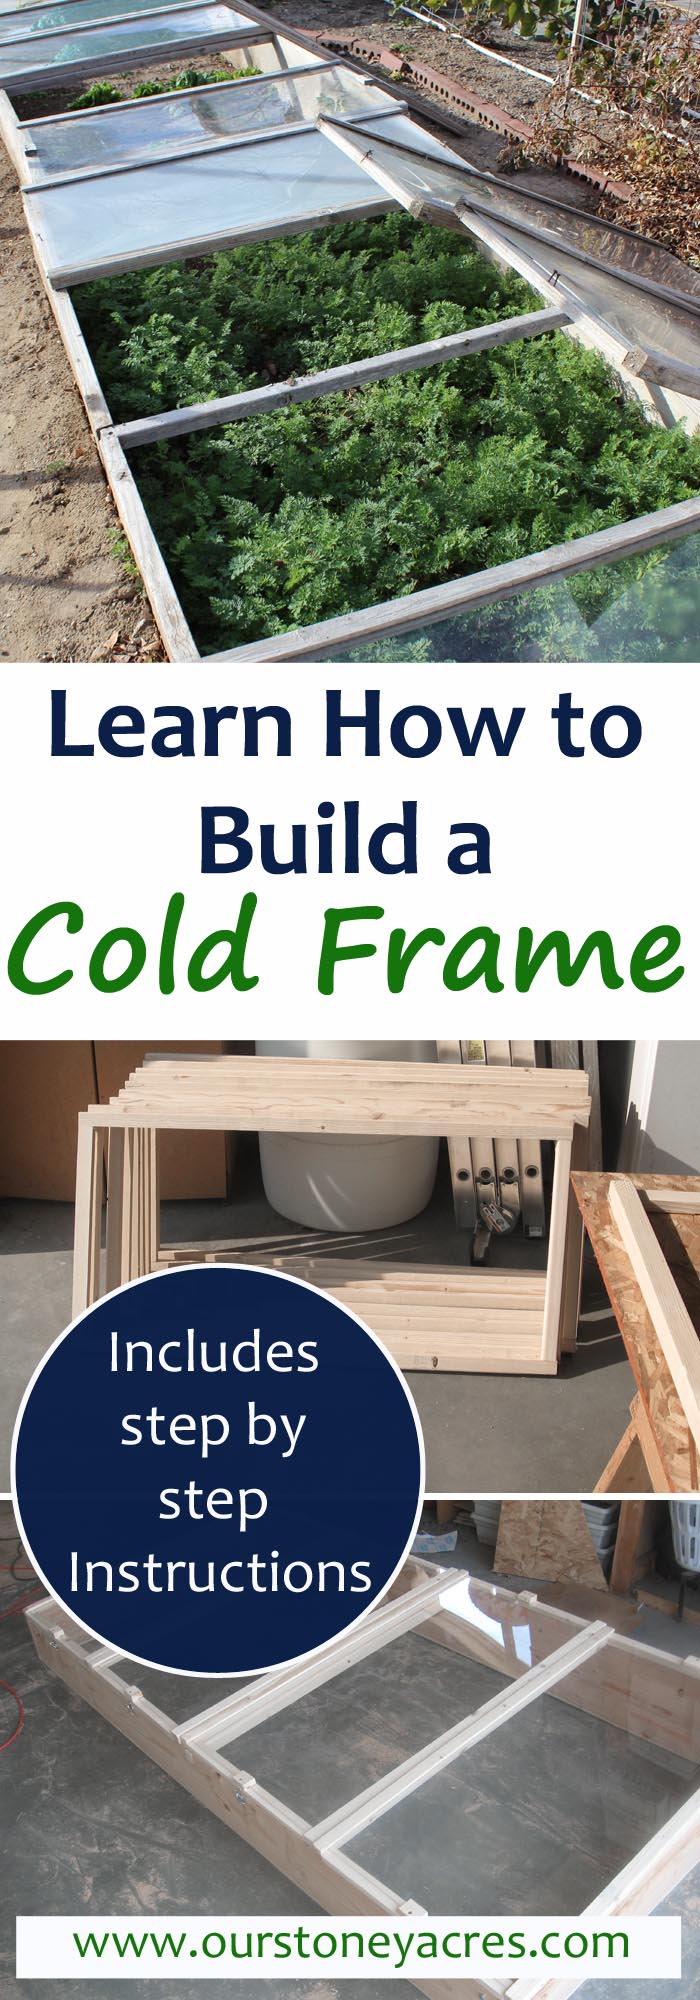 DIY Cold Frames For Your Garden